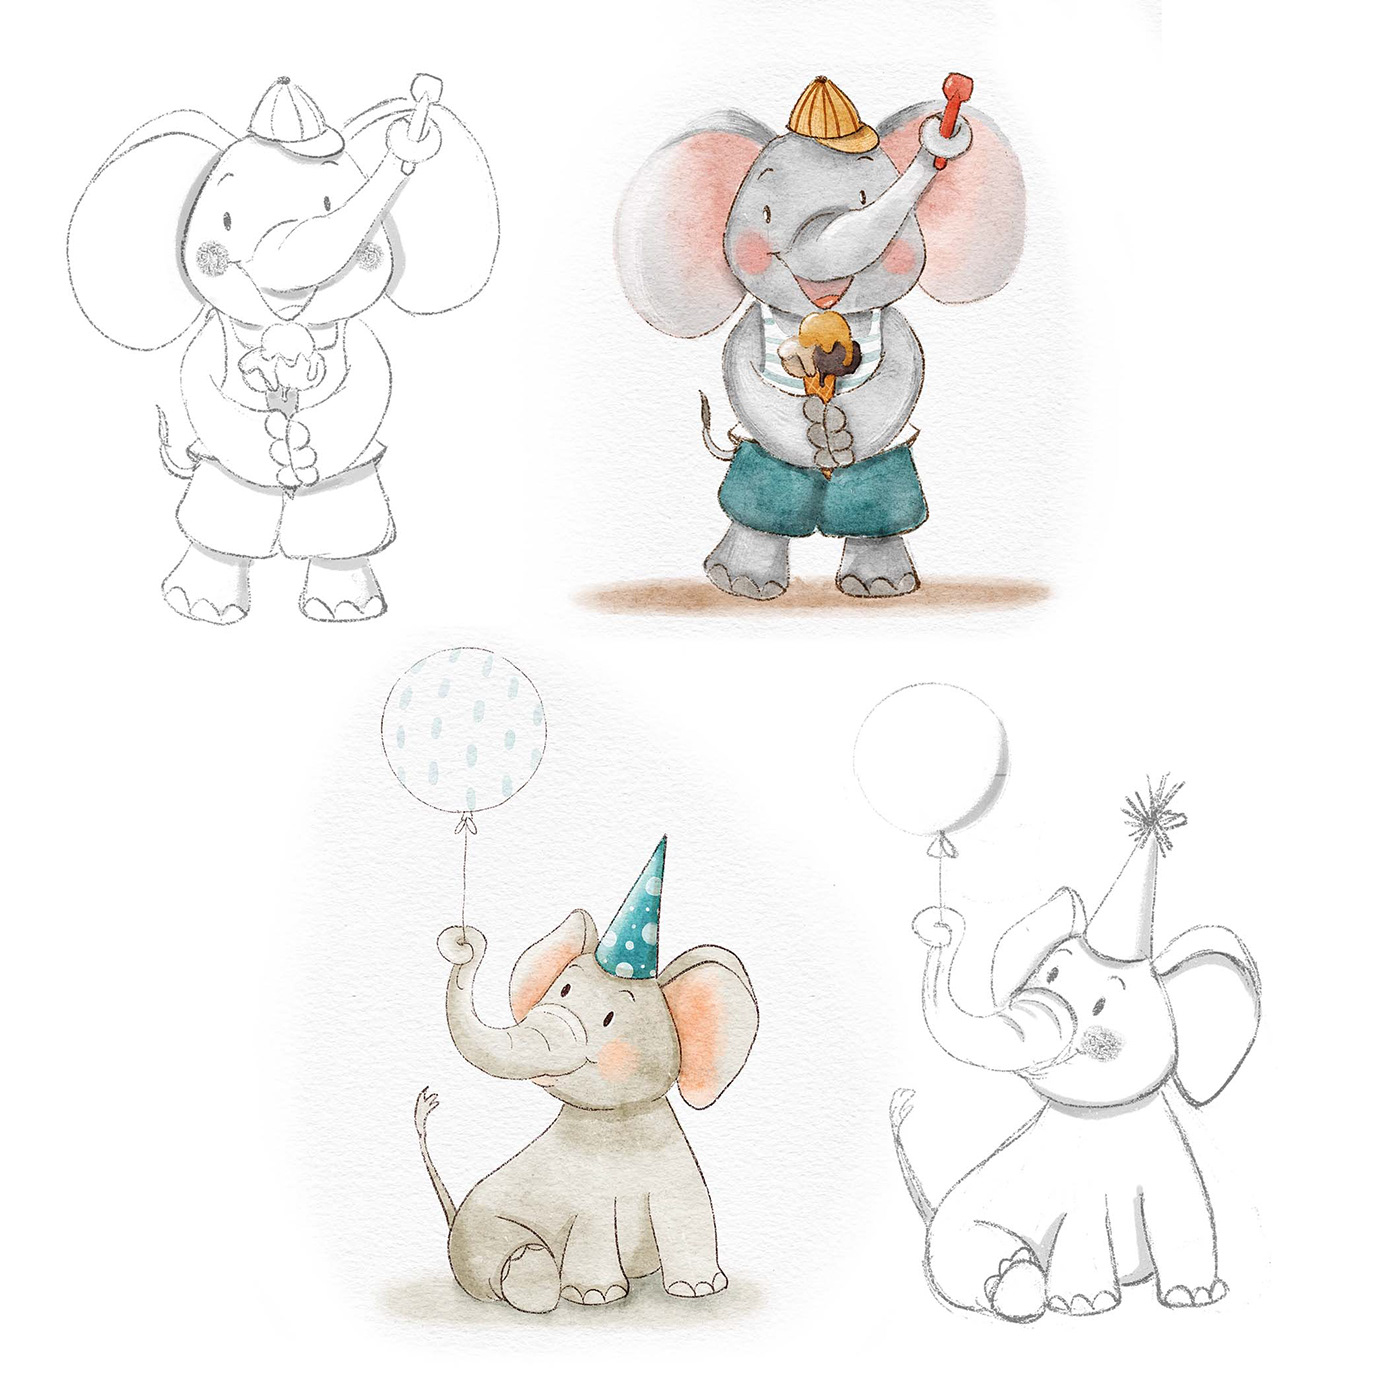 ILLUSTRATION  Character design  cartoon cute illustration cute animals children's book kids illustration children book digital illustration sketch